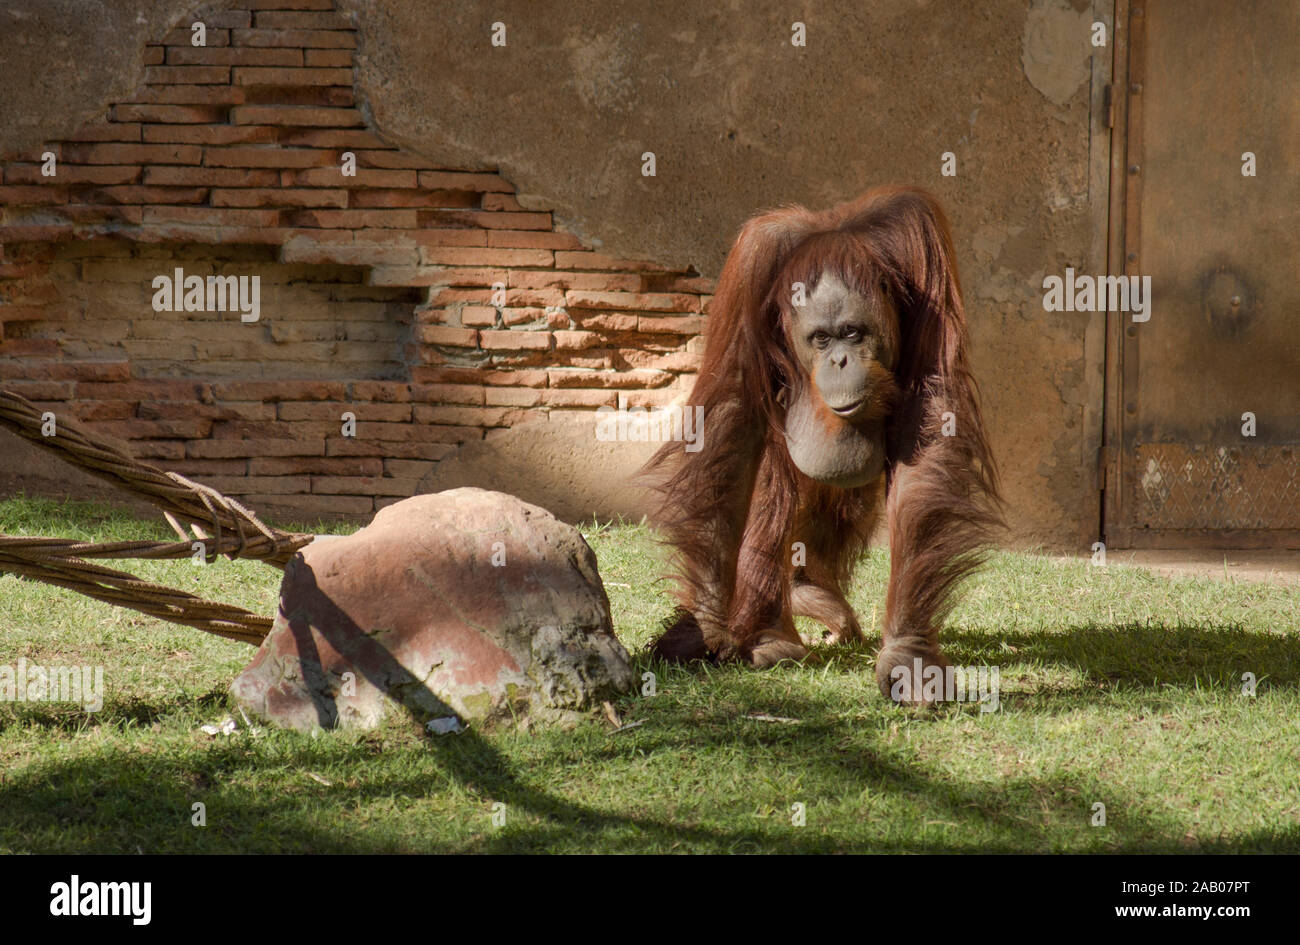 Bornesischen Orang-utan, Pongo pygmaeus in Gehäuse, Orang Utans, Zoo Bioparc Fuengirola, Spanien. Stockfoto